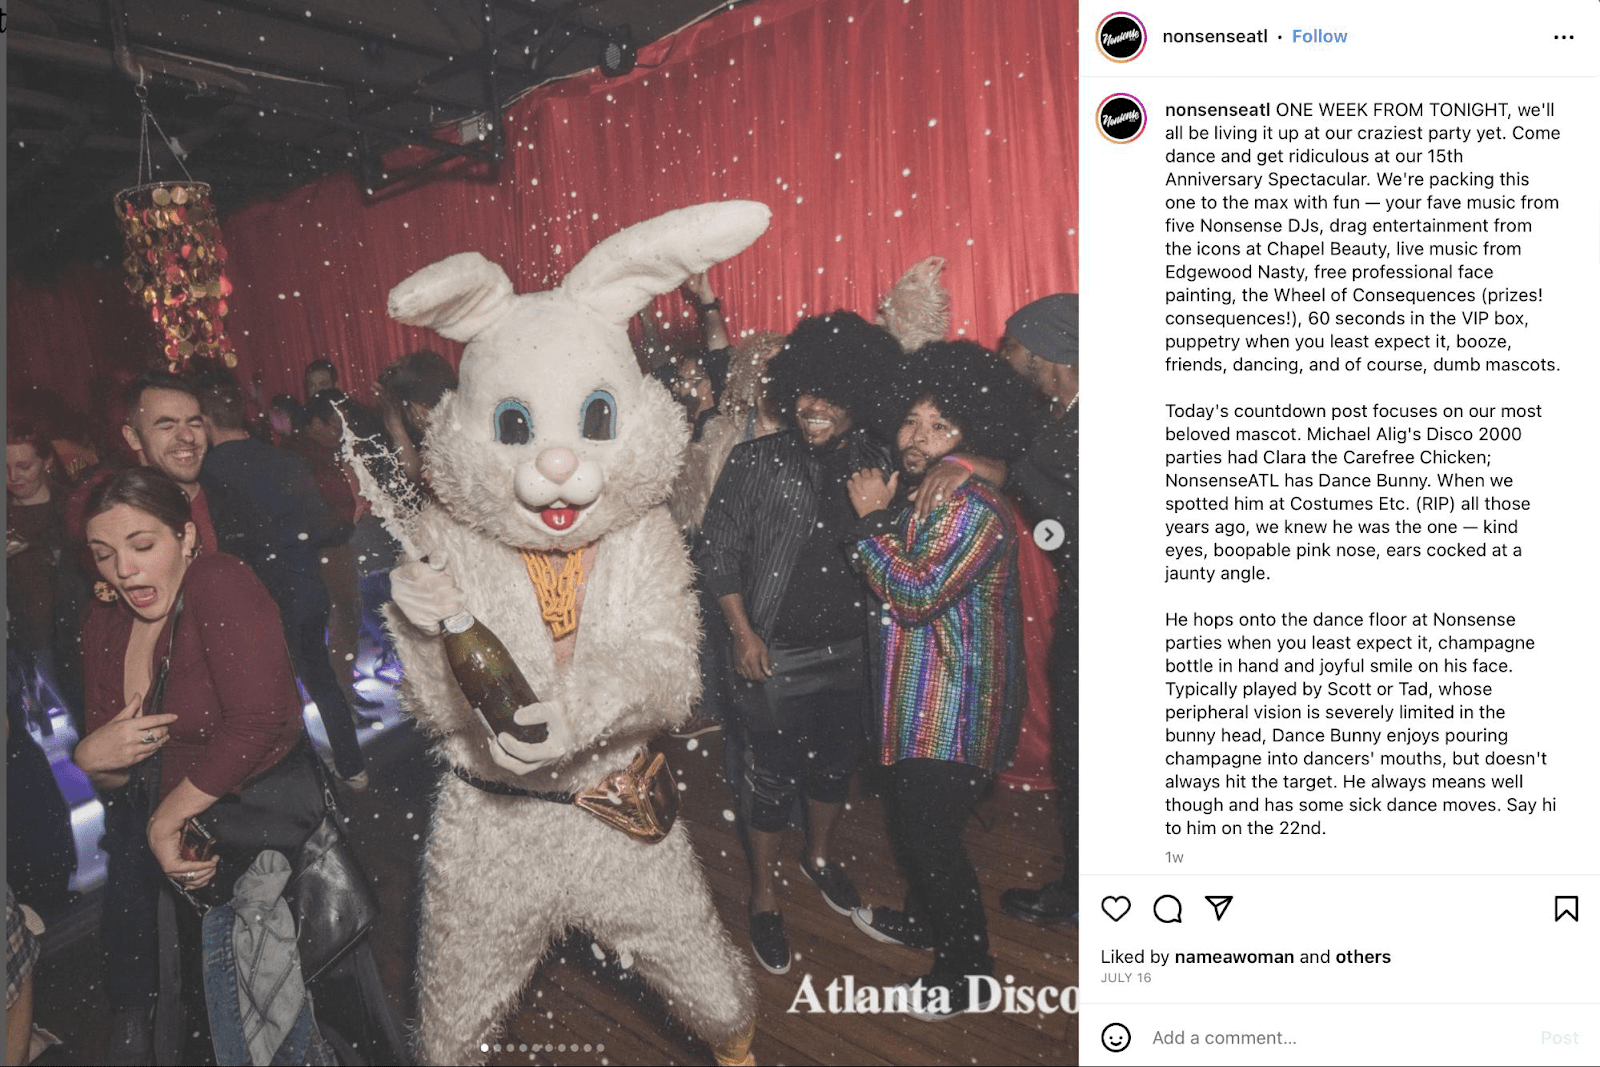 Nonsense alt bunny event